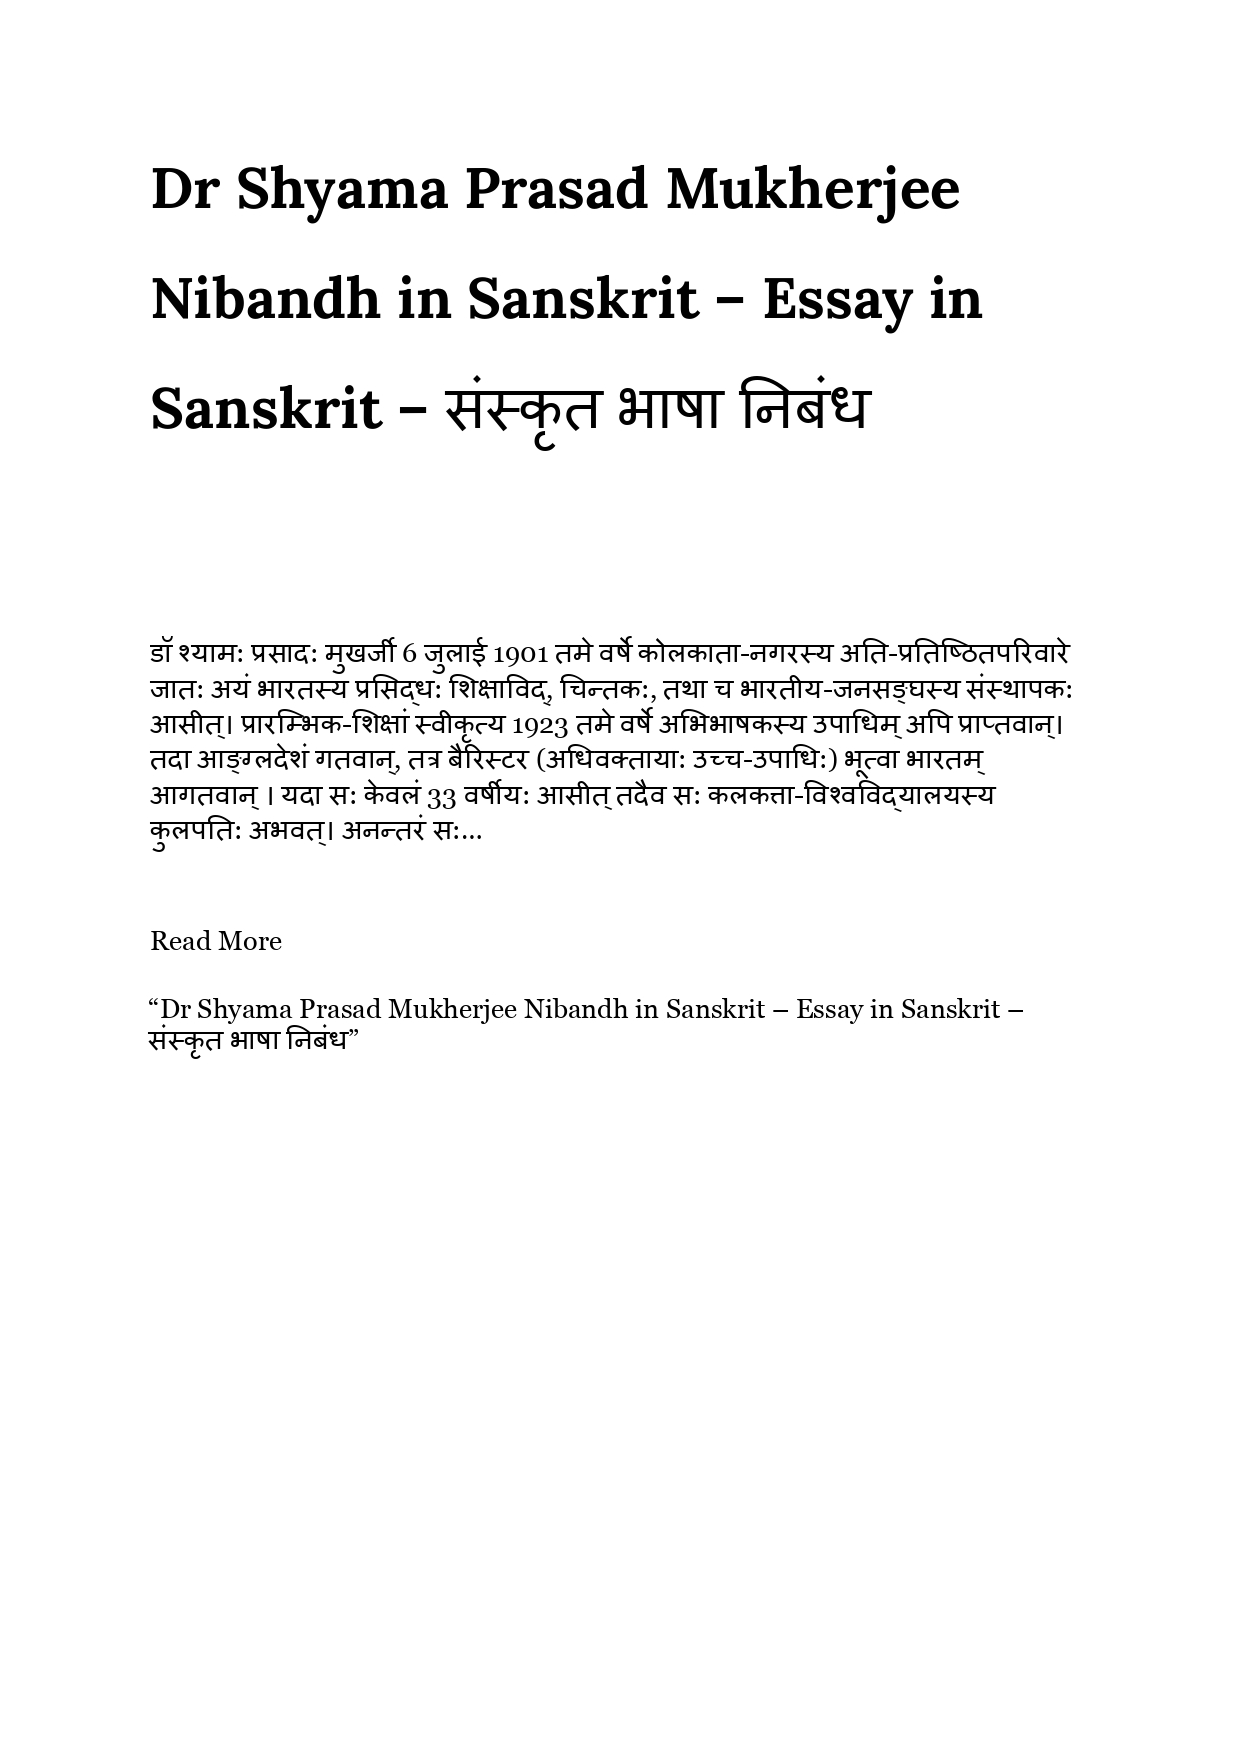 maharashtra essay in sanskrit